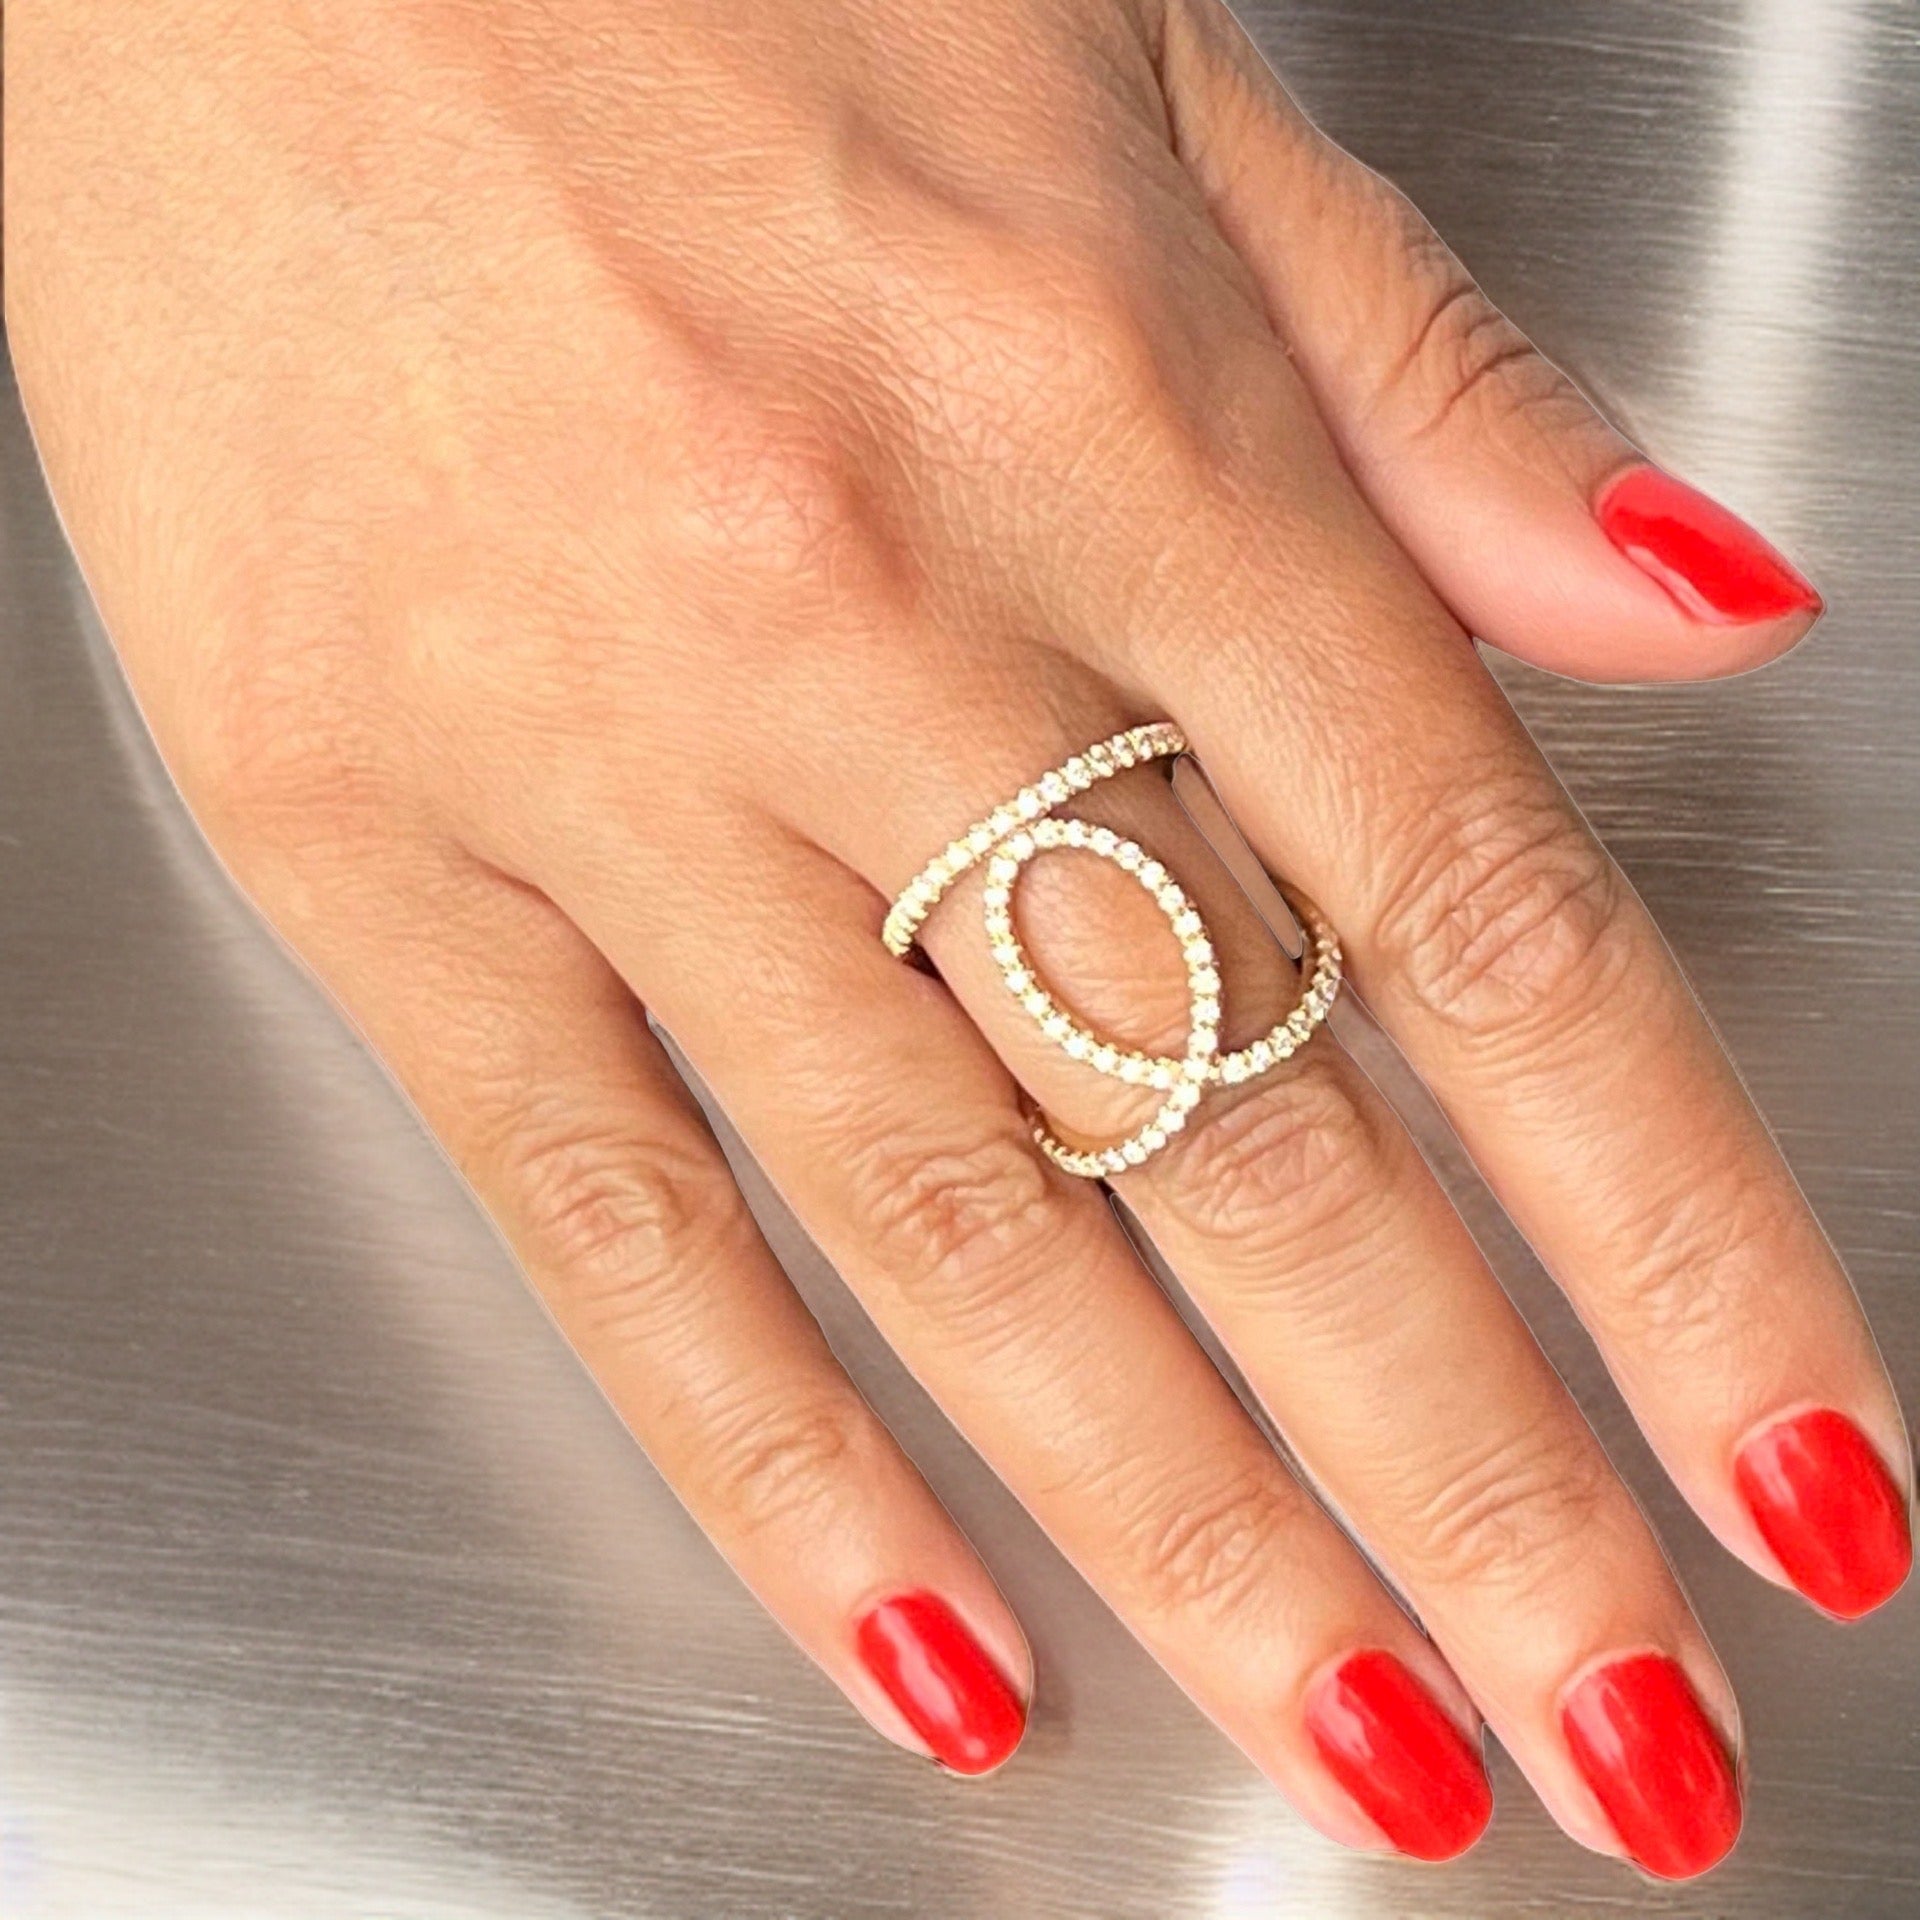 Diamond Ring 14k Gold 0.85 TCW Size 9.25 Certified $5,950 215643 - Certified Fine Jewelry